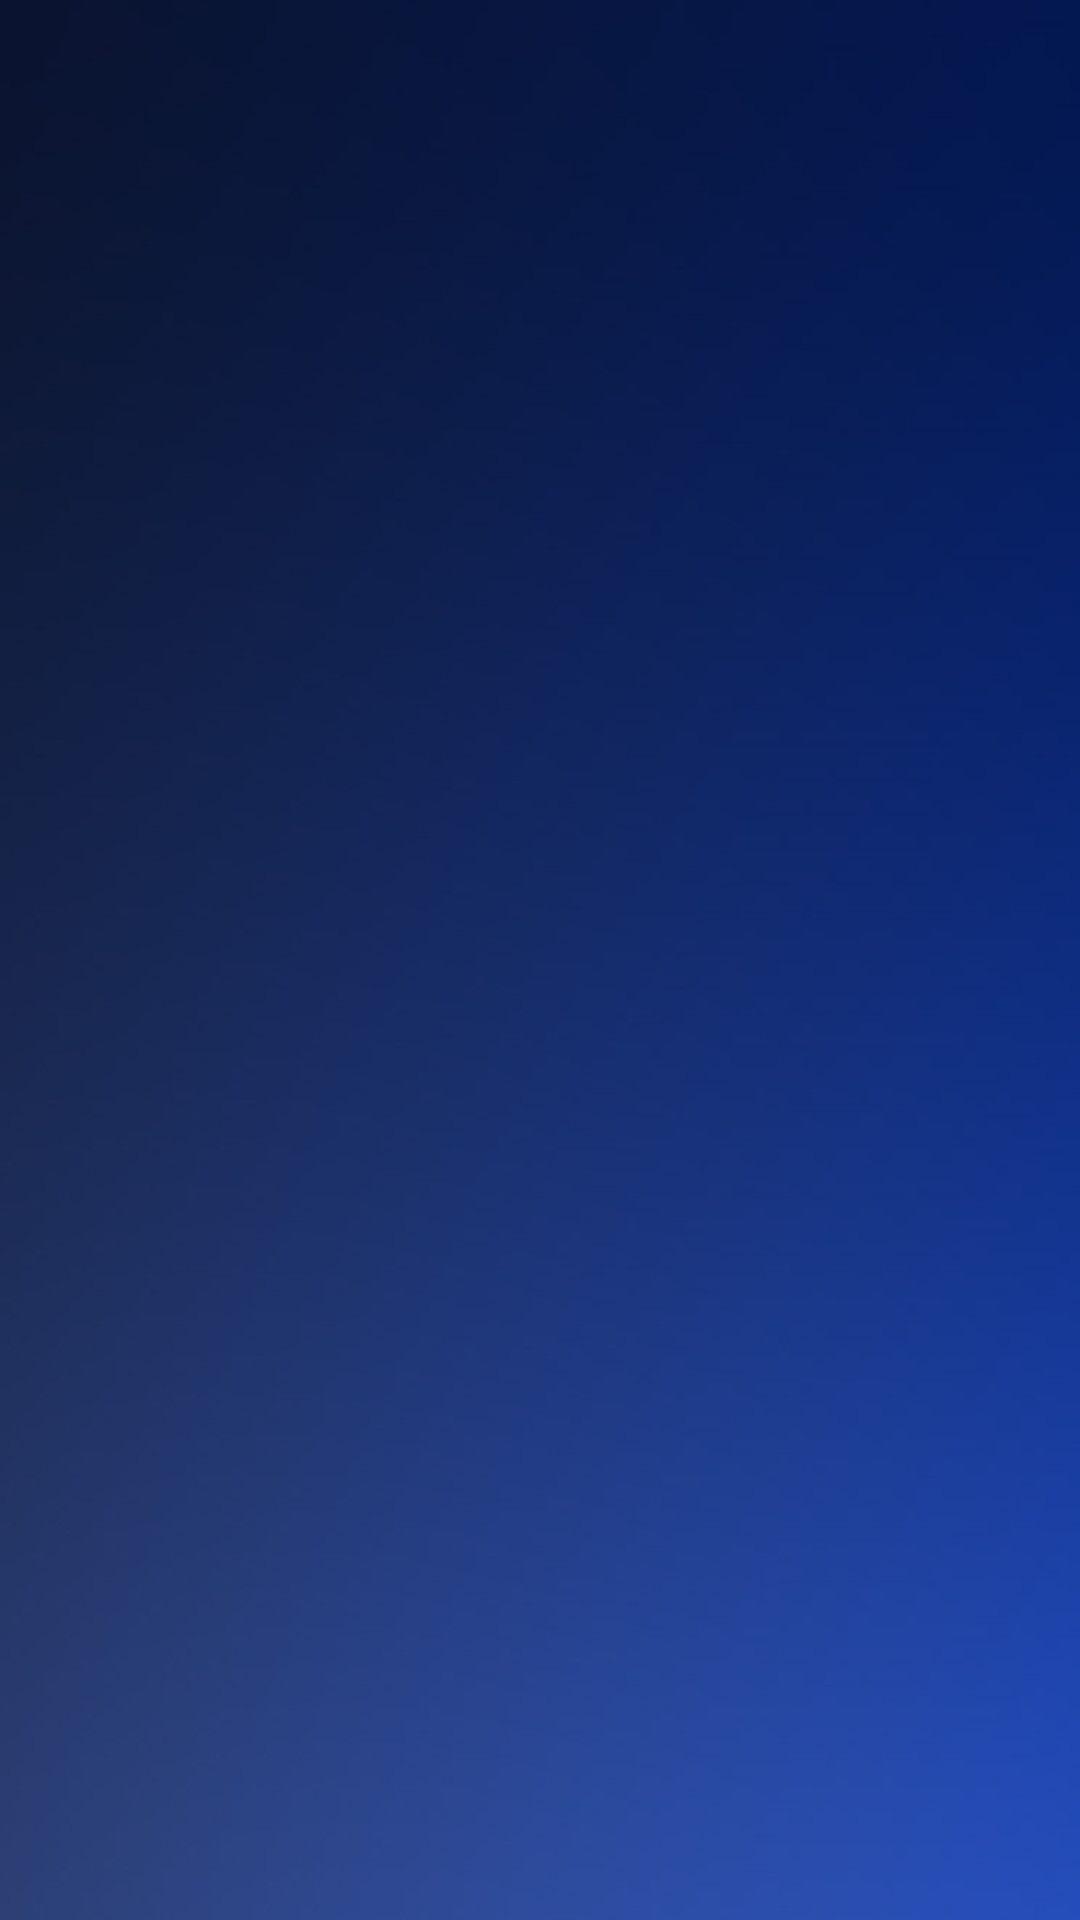 Dark Blue Wallpaper 4k iPhone